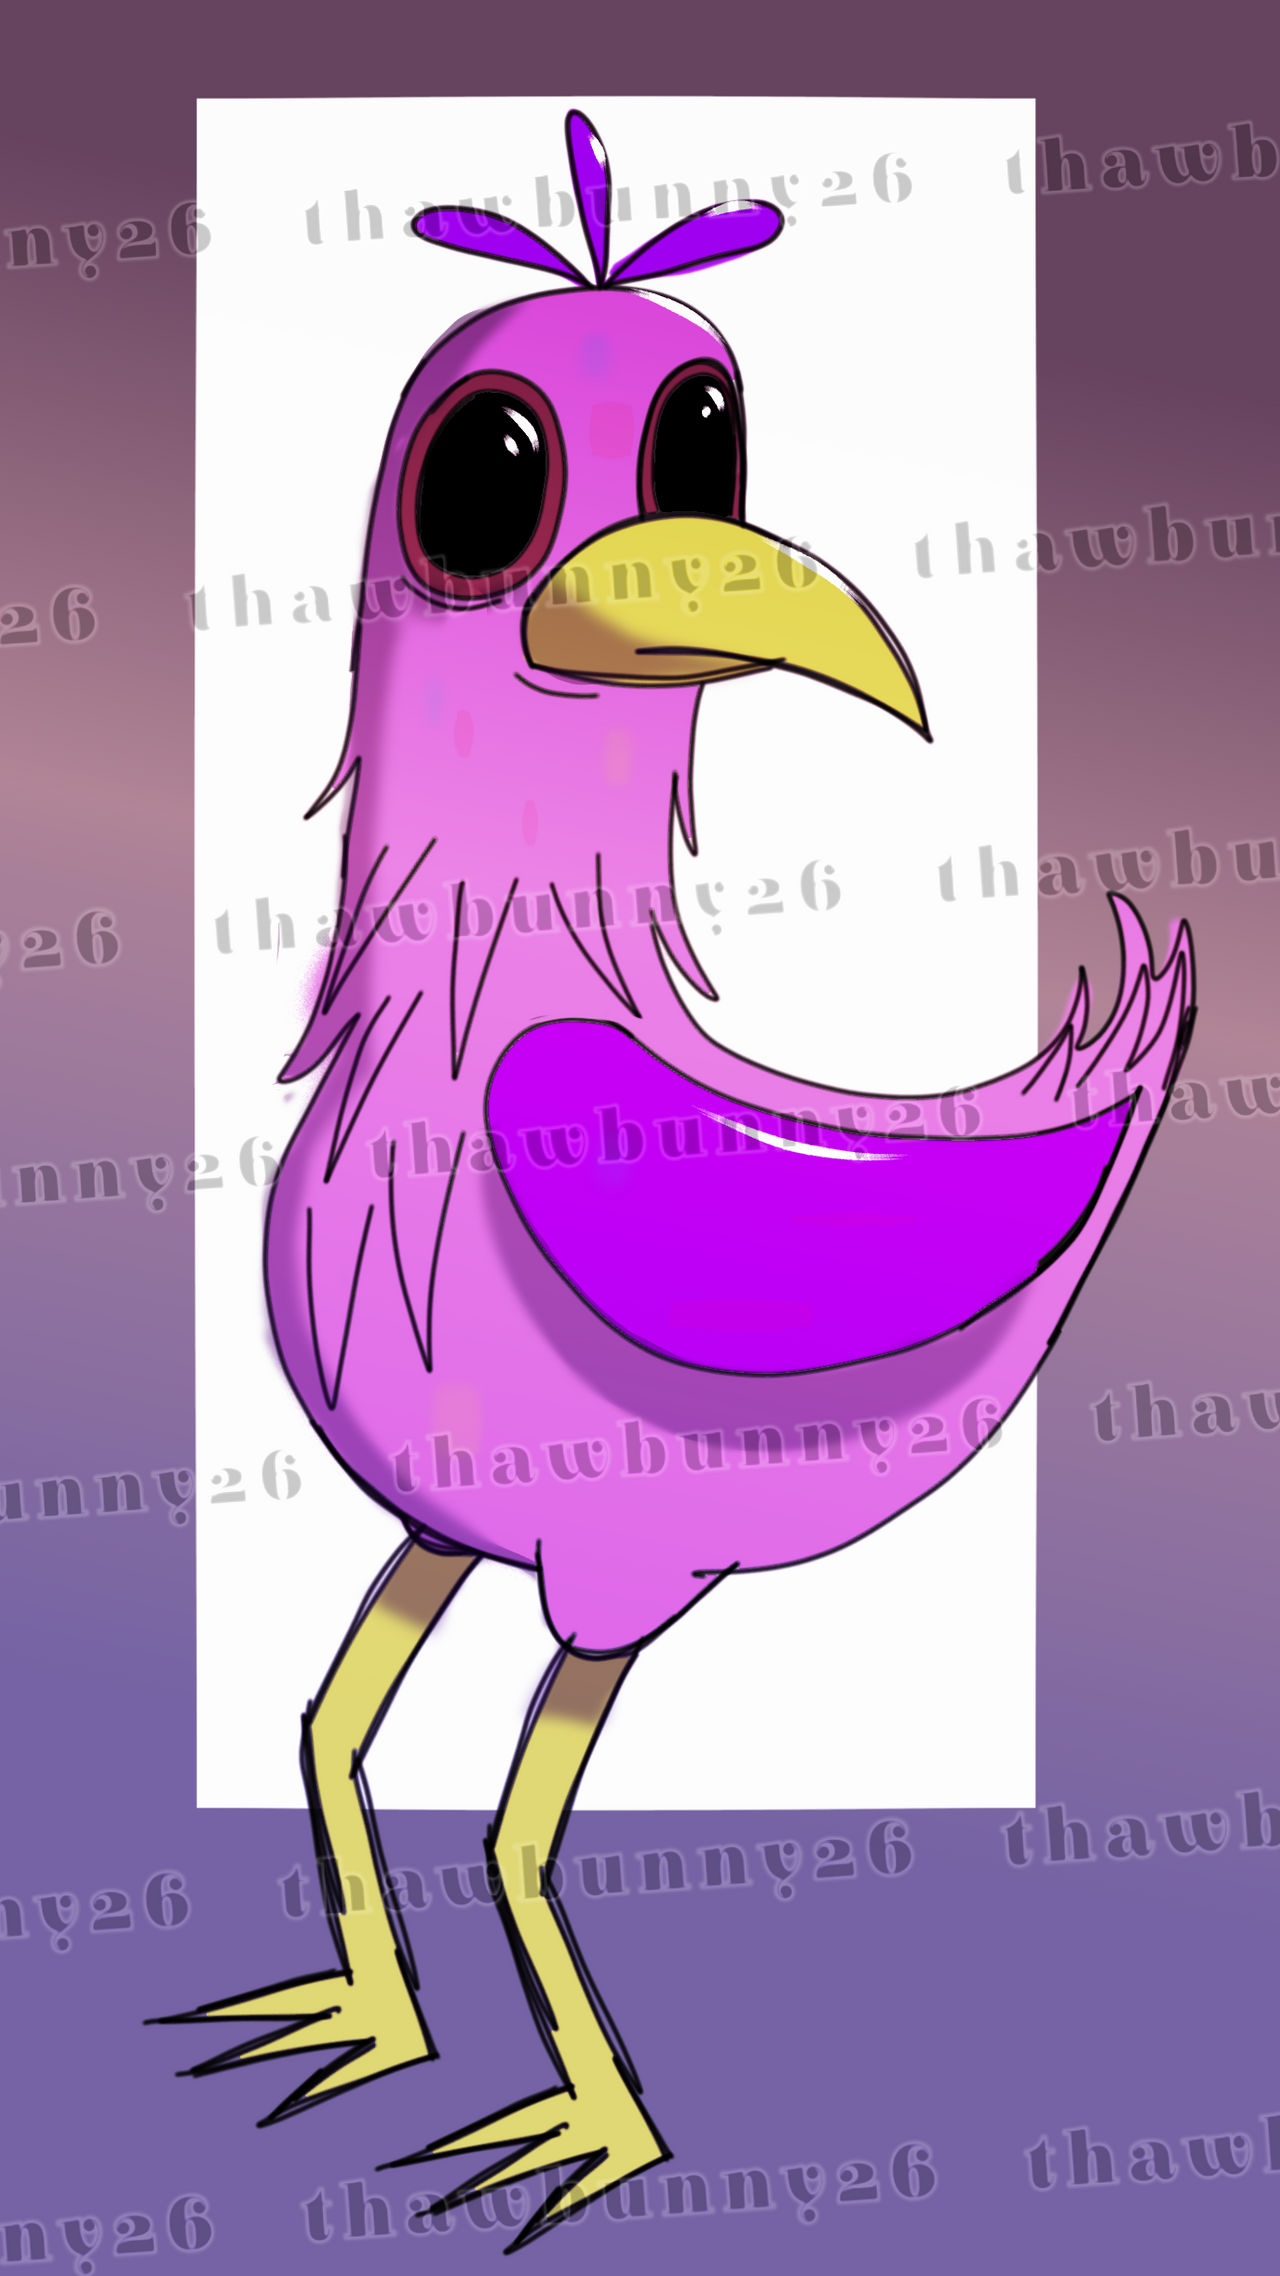 Opila Bird from the game Garten of Banban